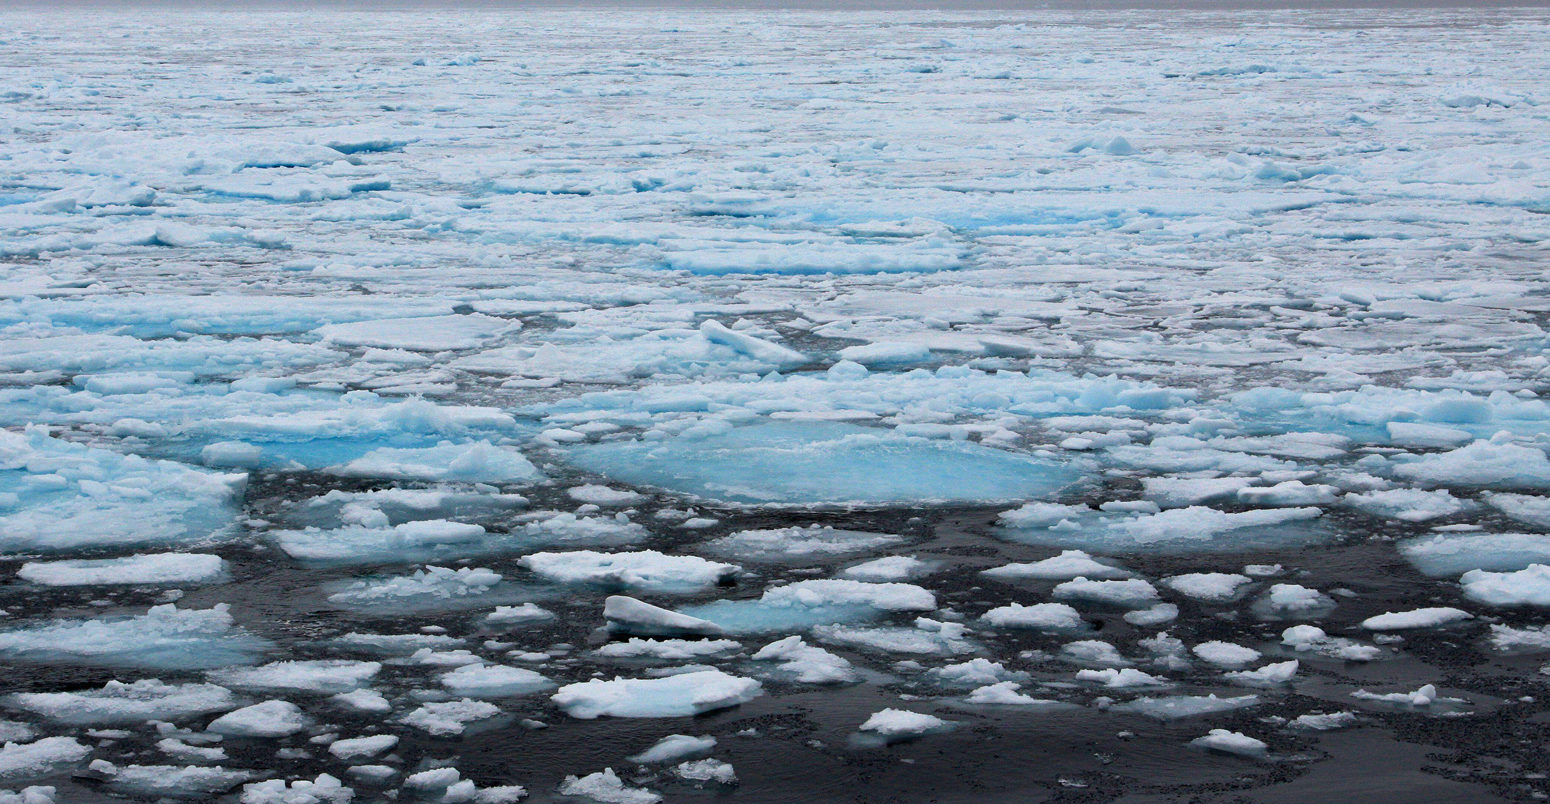 Sea ice in Svalbard